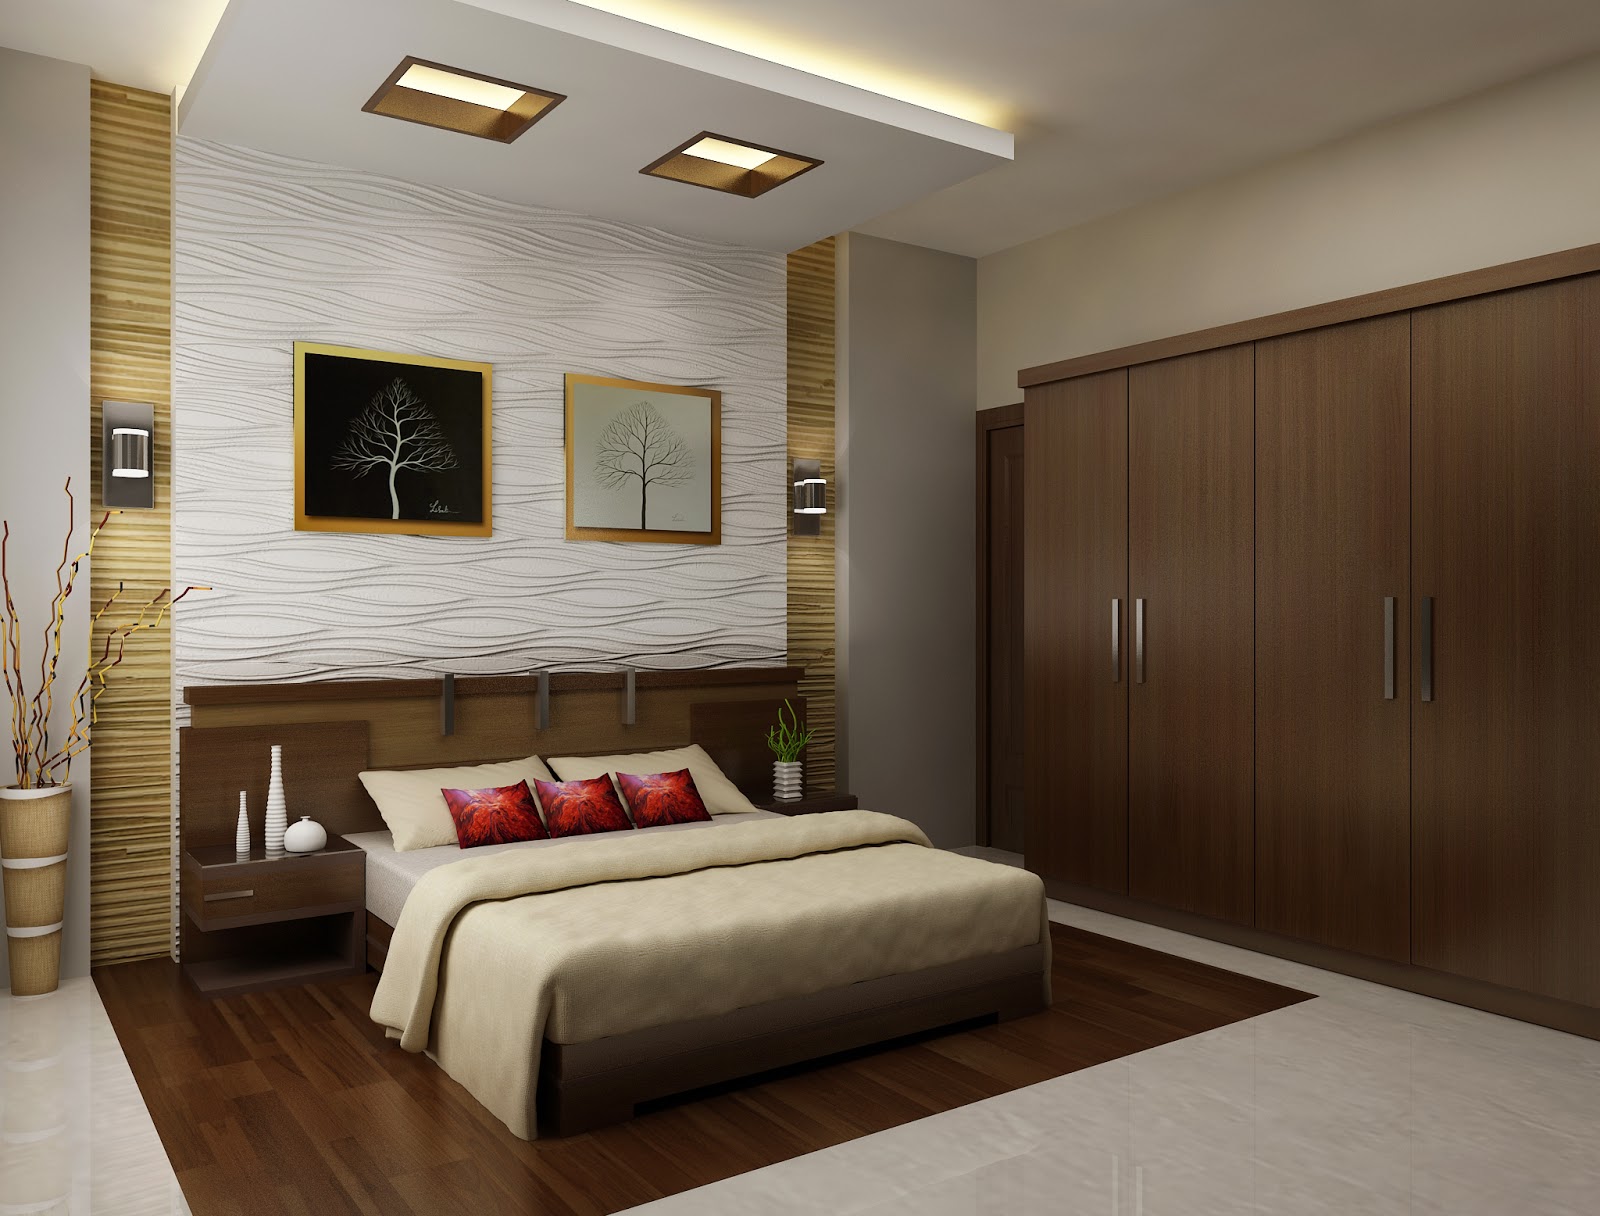 Small Home Interior Bedroom Designs